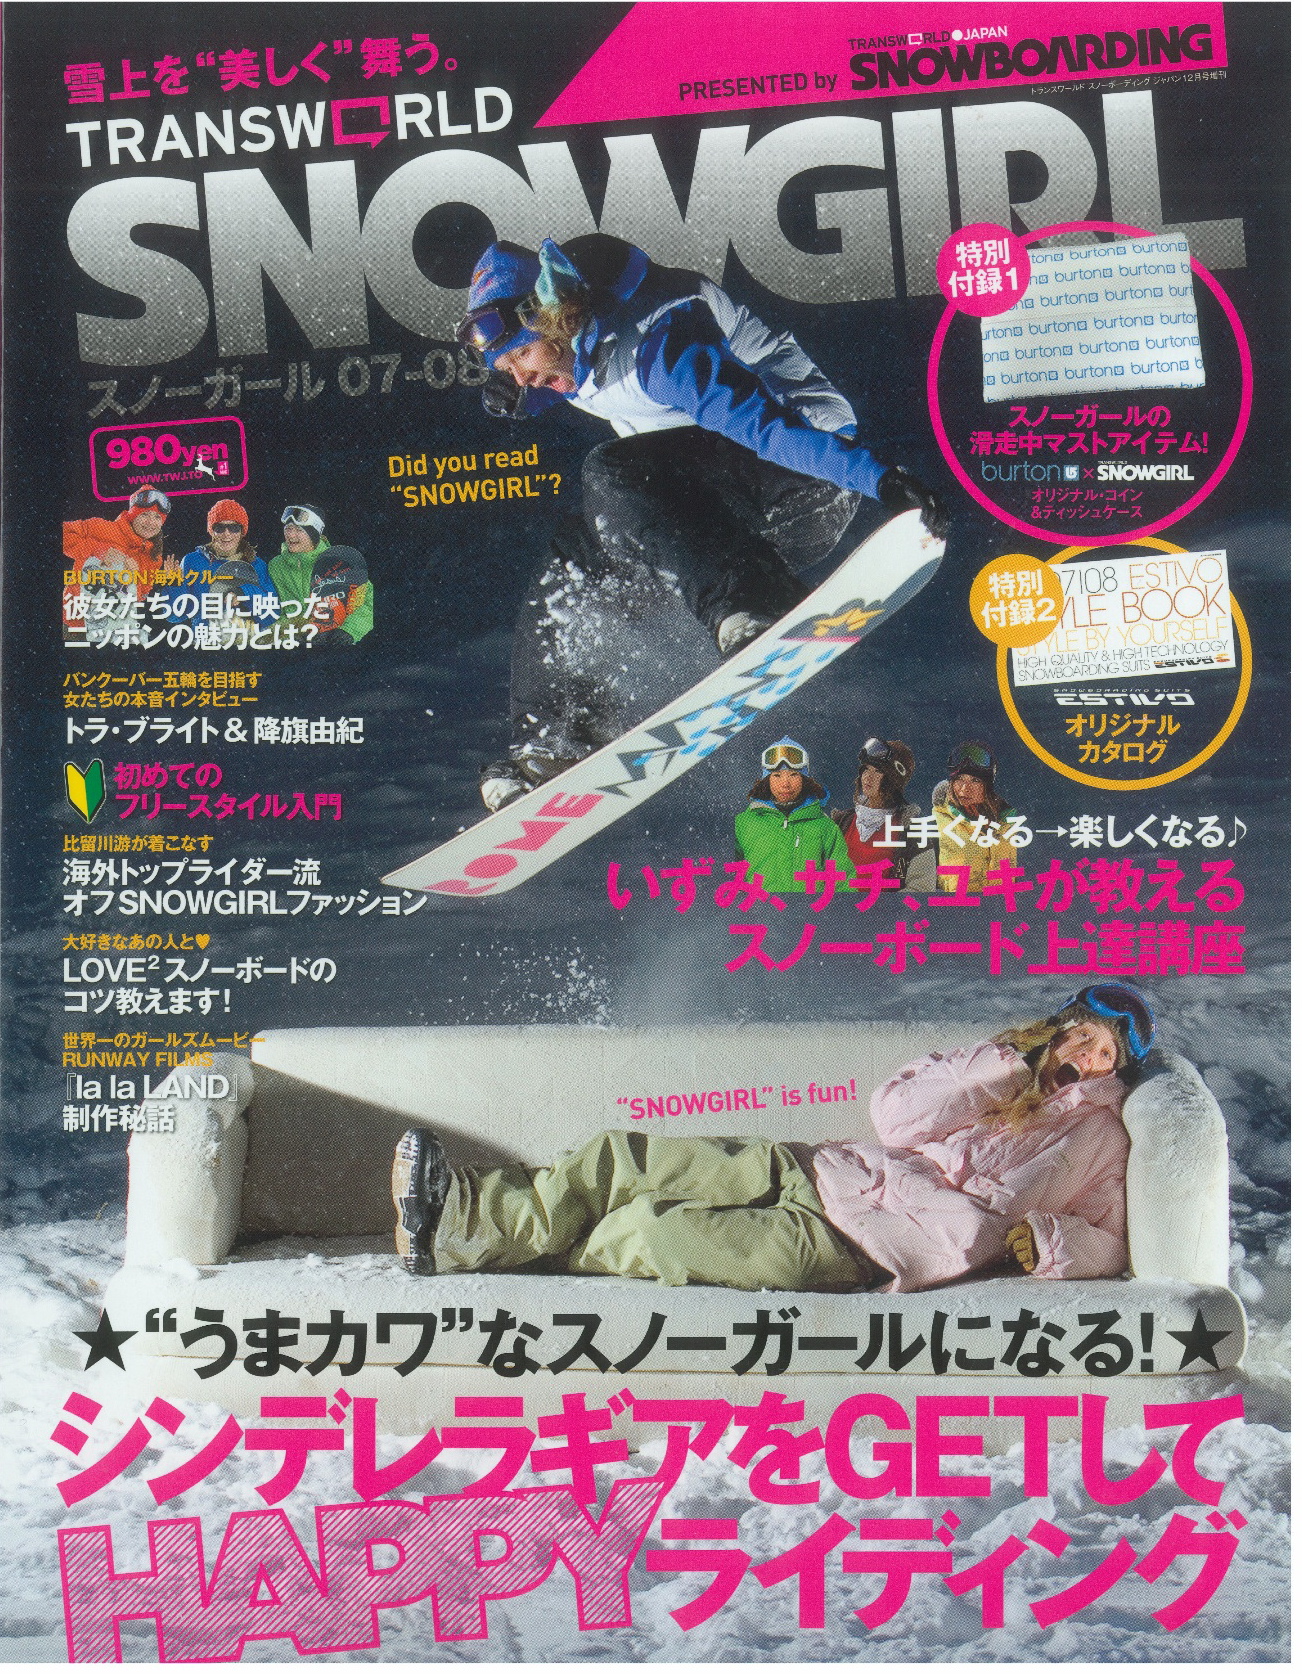 transworld snowgirl japan cover.jpg